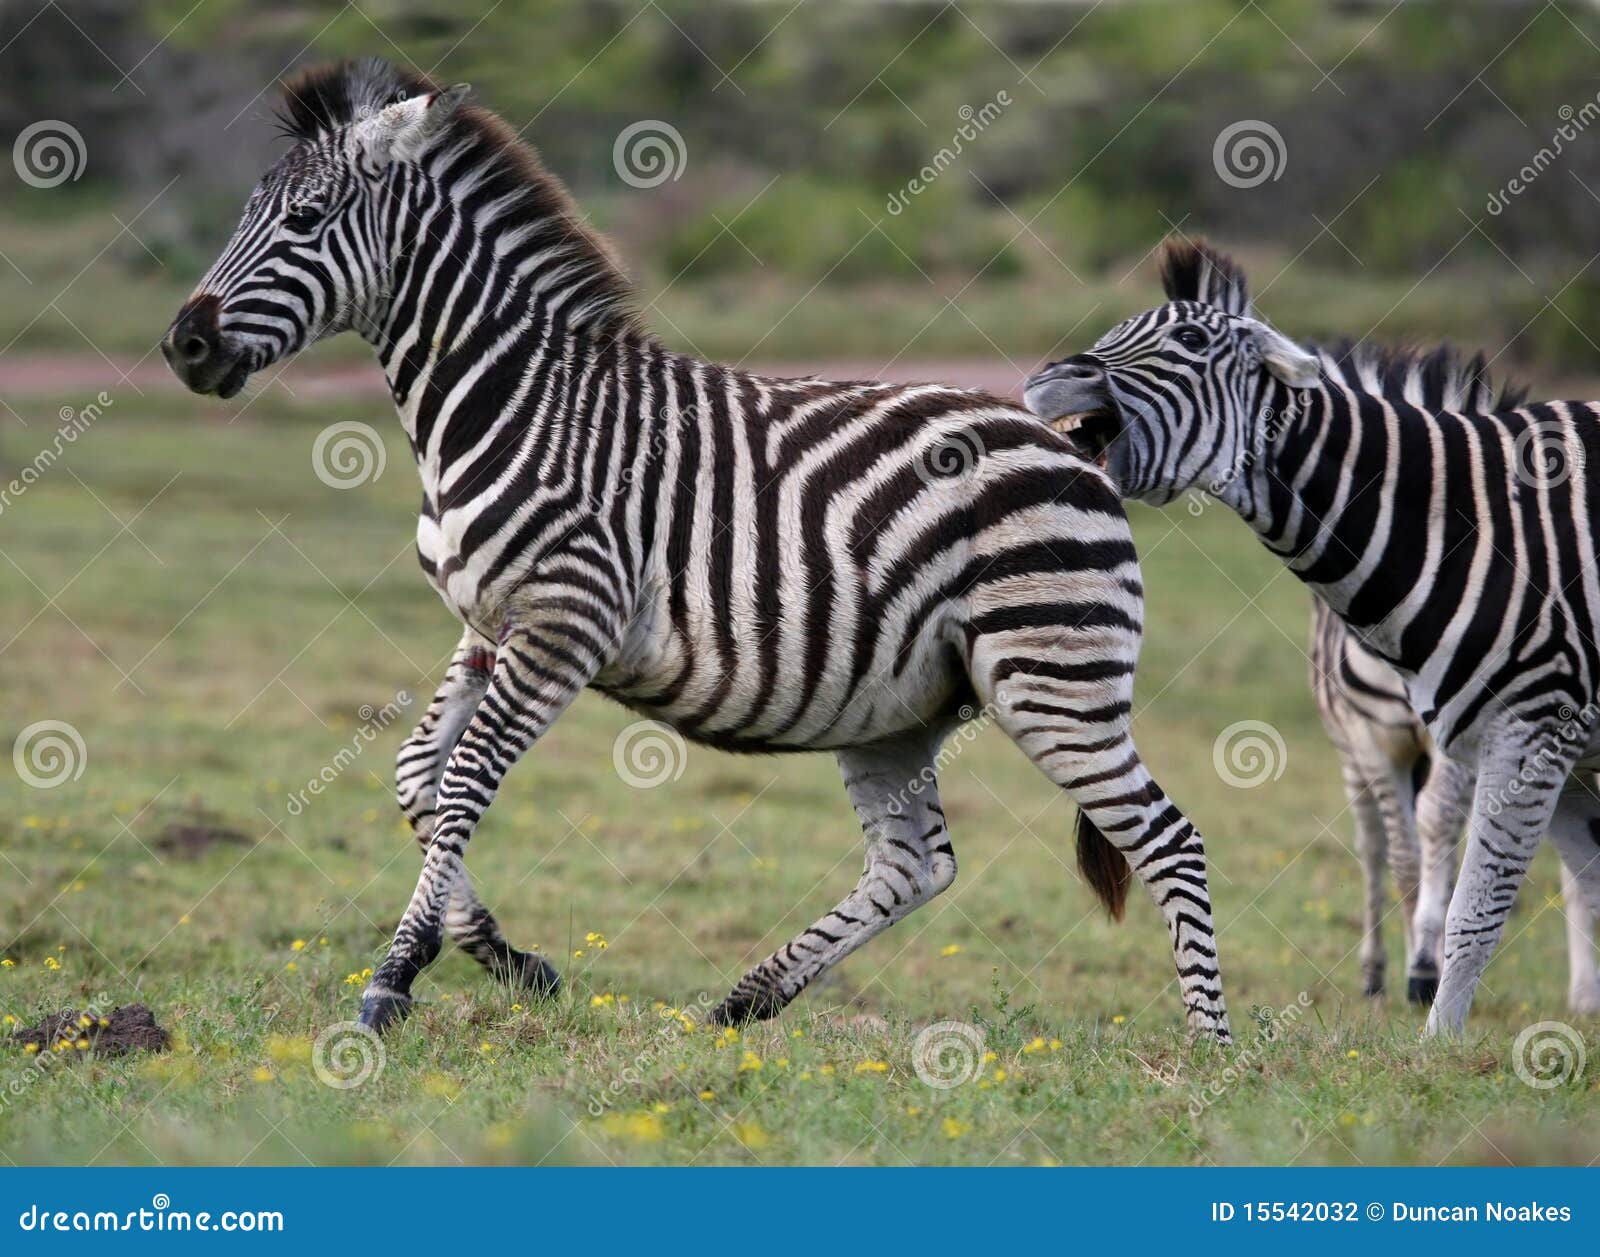 zebra aggression